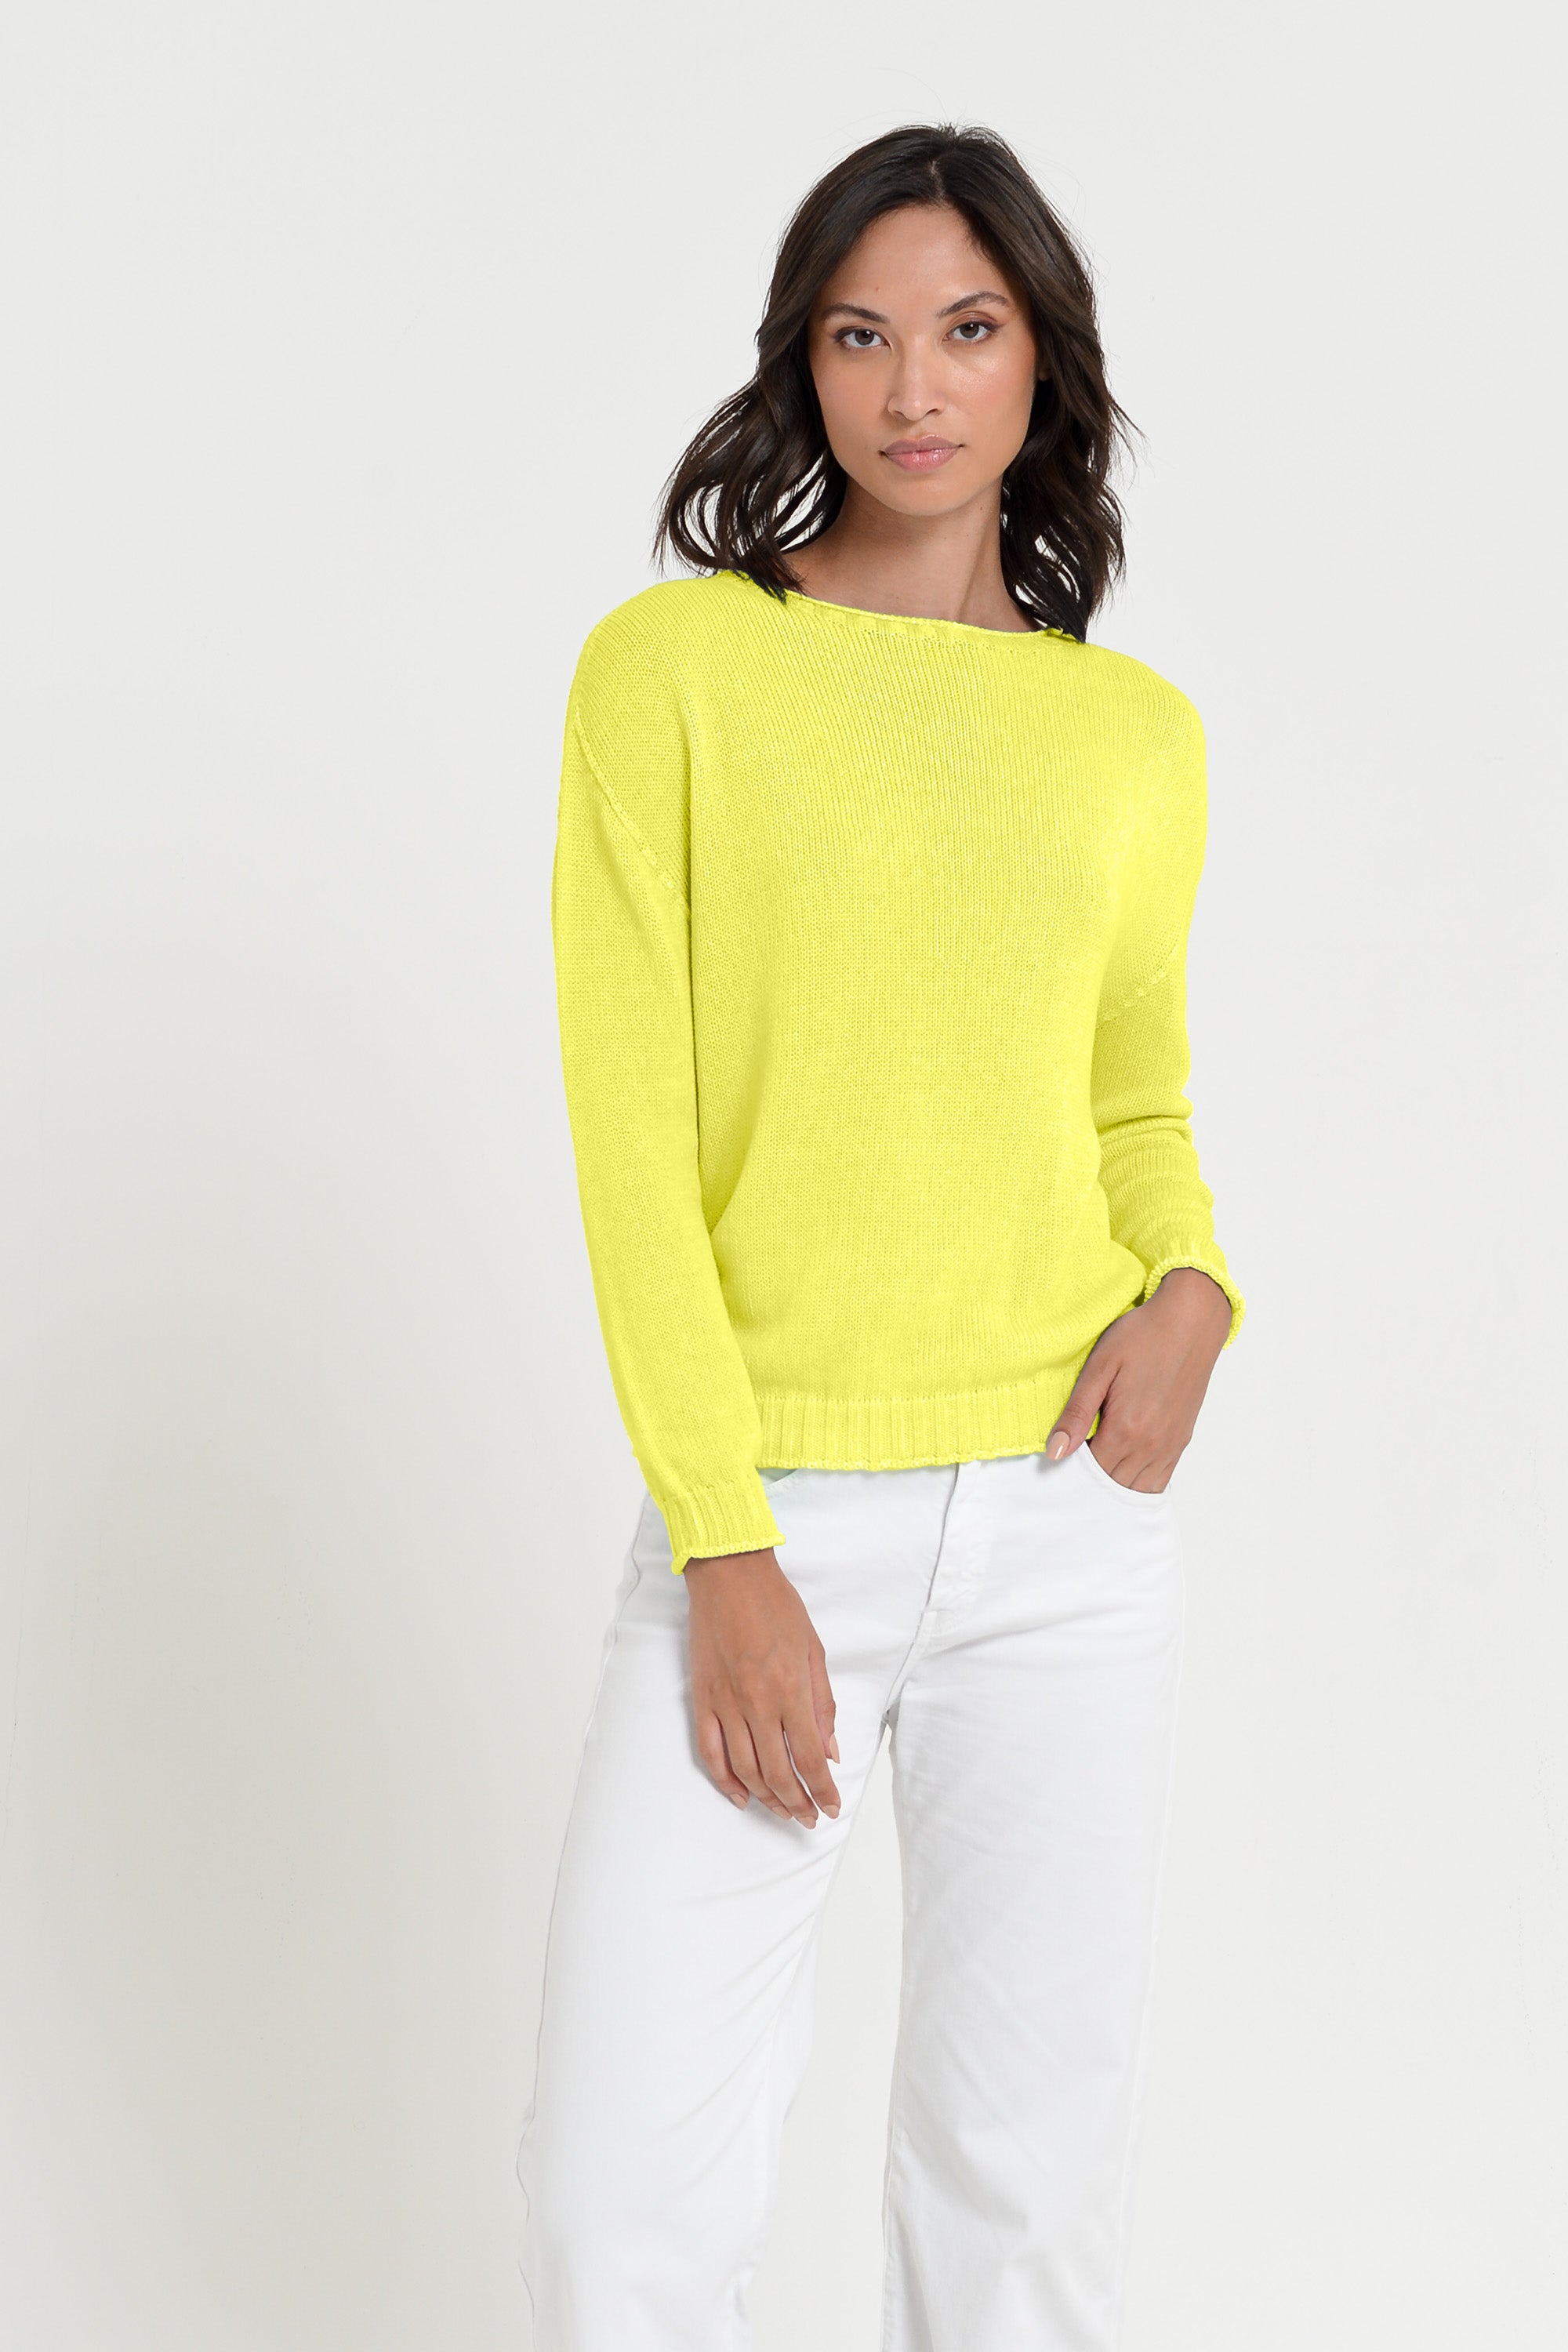 Vaze Knit - Women's Cotton Knit Sweater - Lime